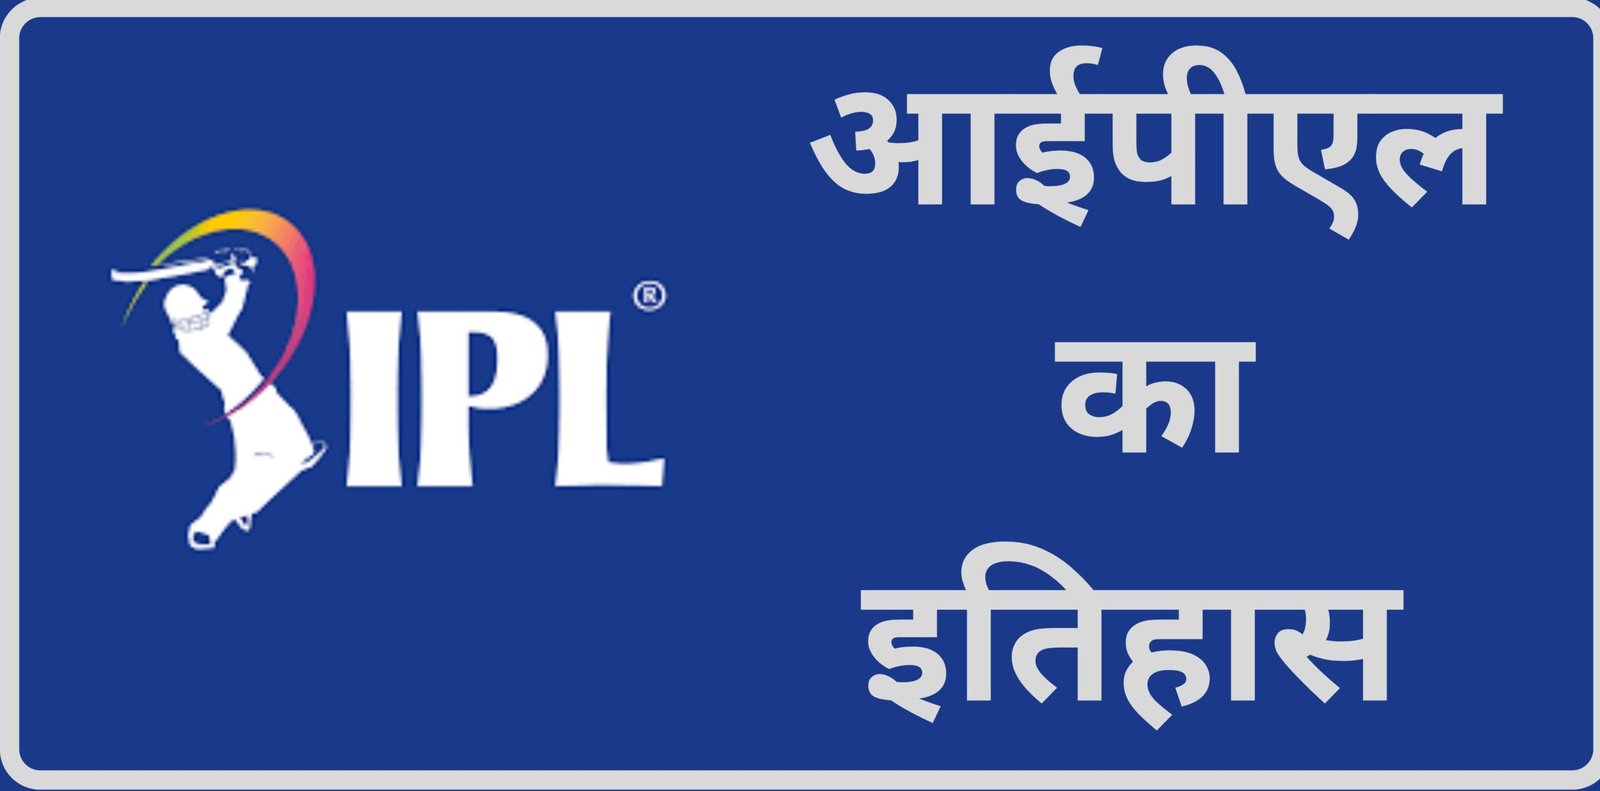 Indian Premier Leauge IPL Wikipedia